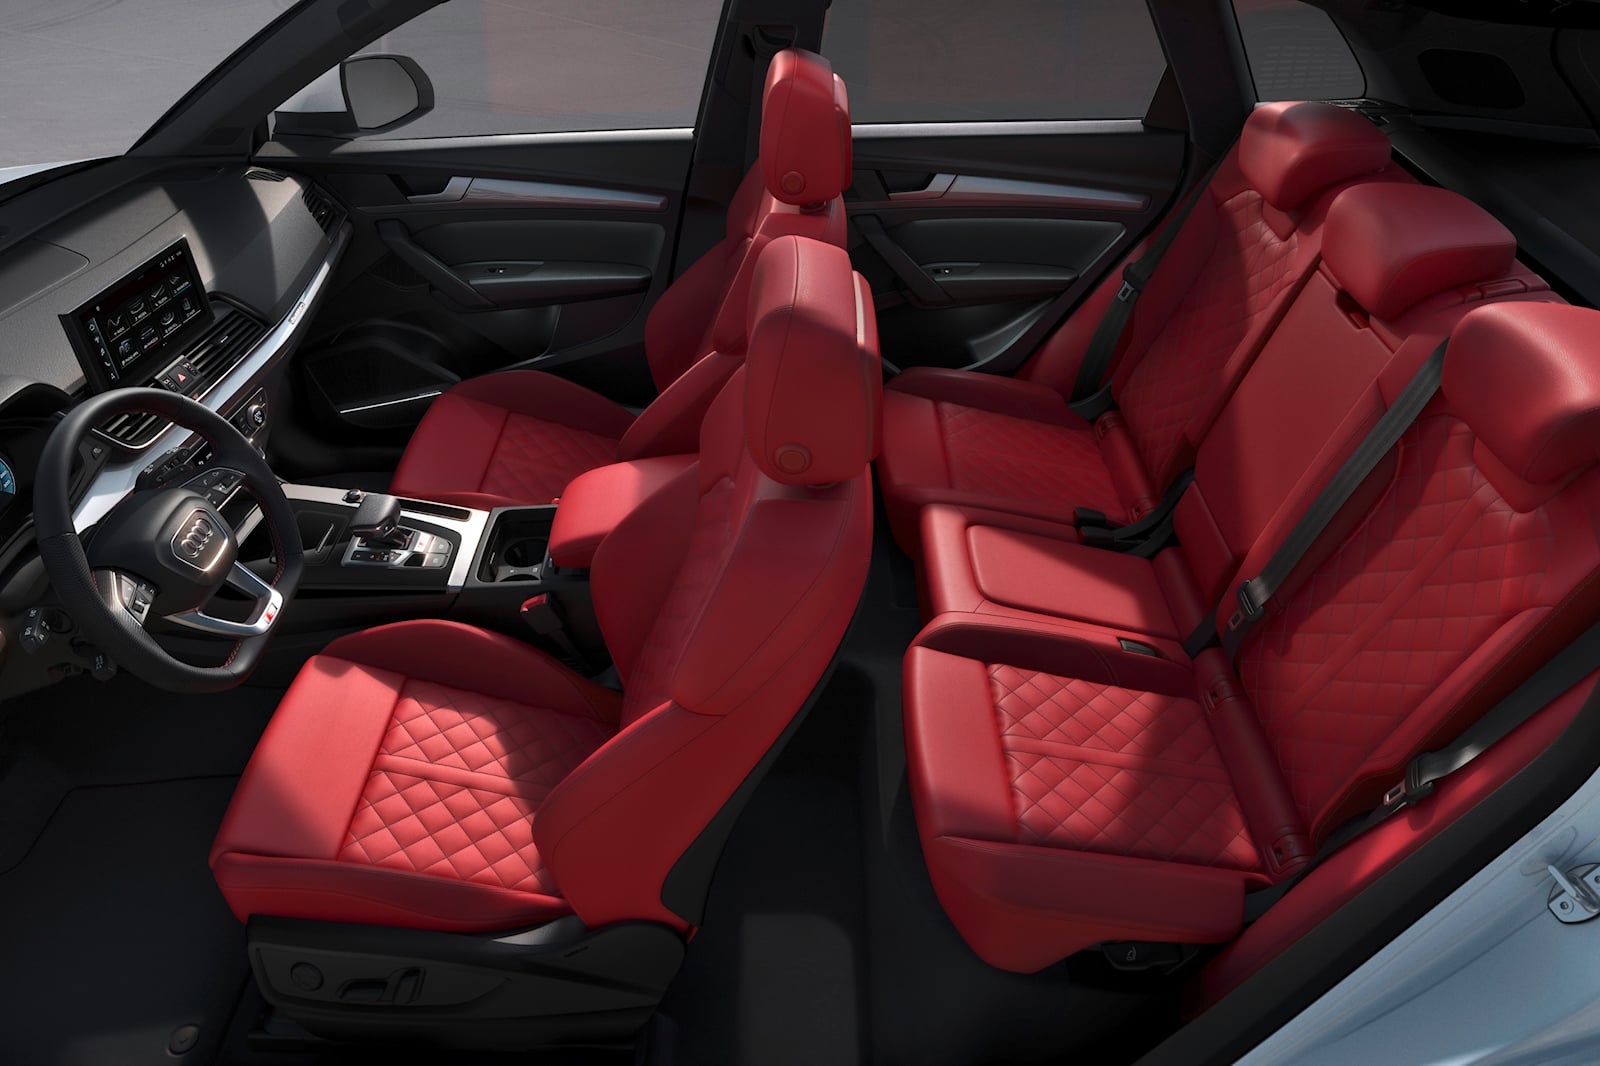 Audi SQ5 interior - Seats